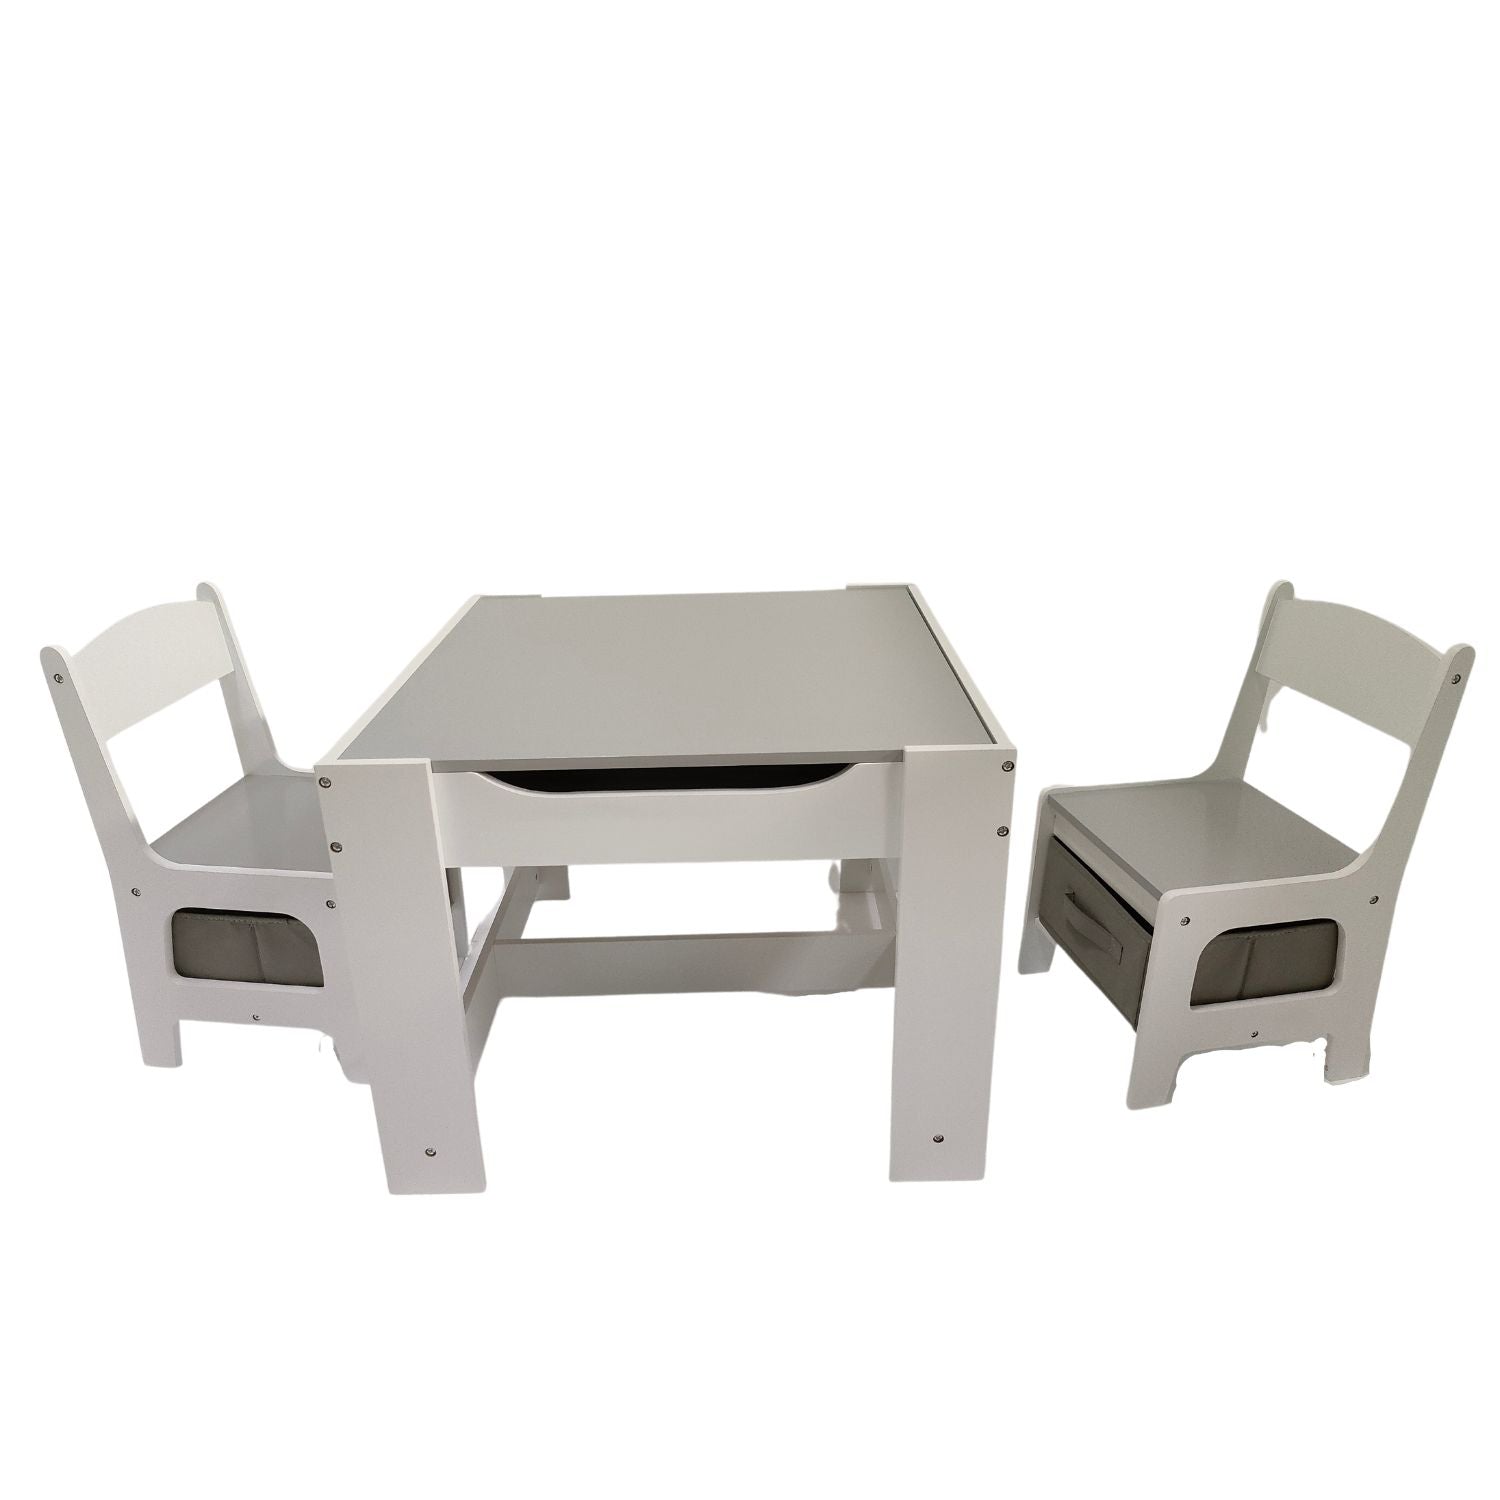 EKKIO 3PCS Kids Table and Chairs Set with Black Chalkboard (Grey) EK-KTCS-102-RHH - SILBERSHELL